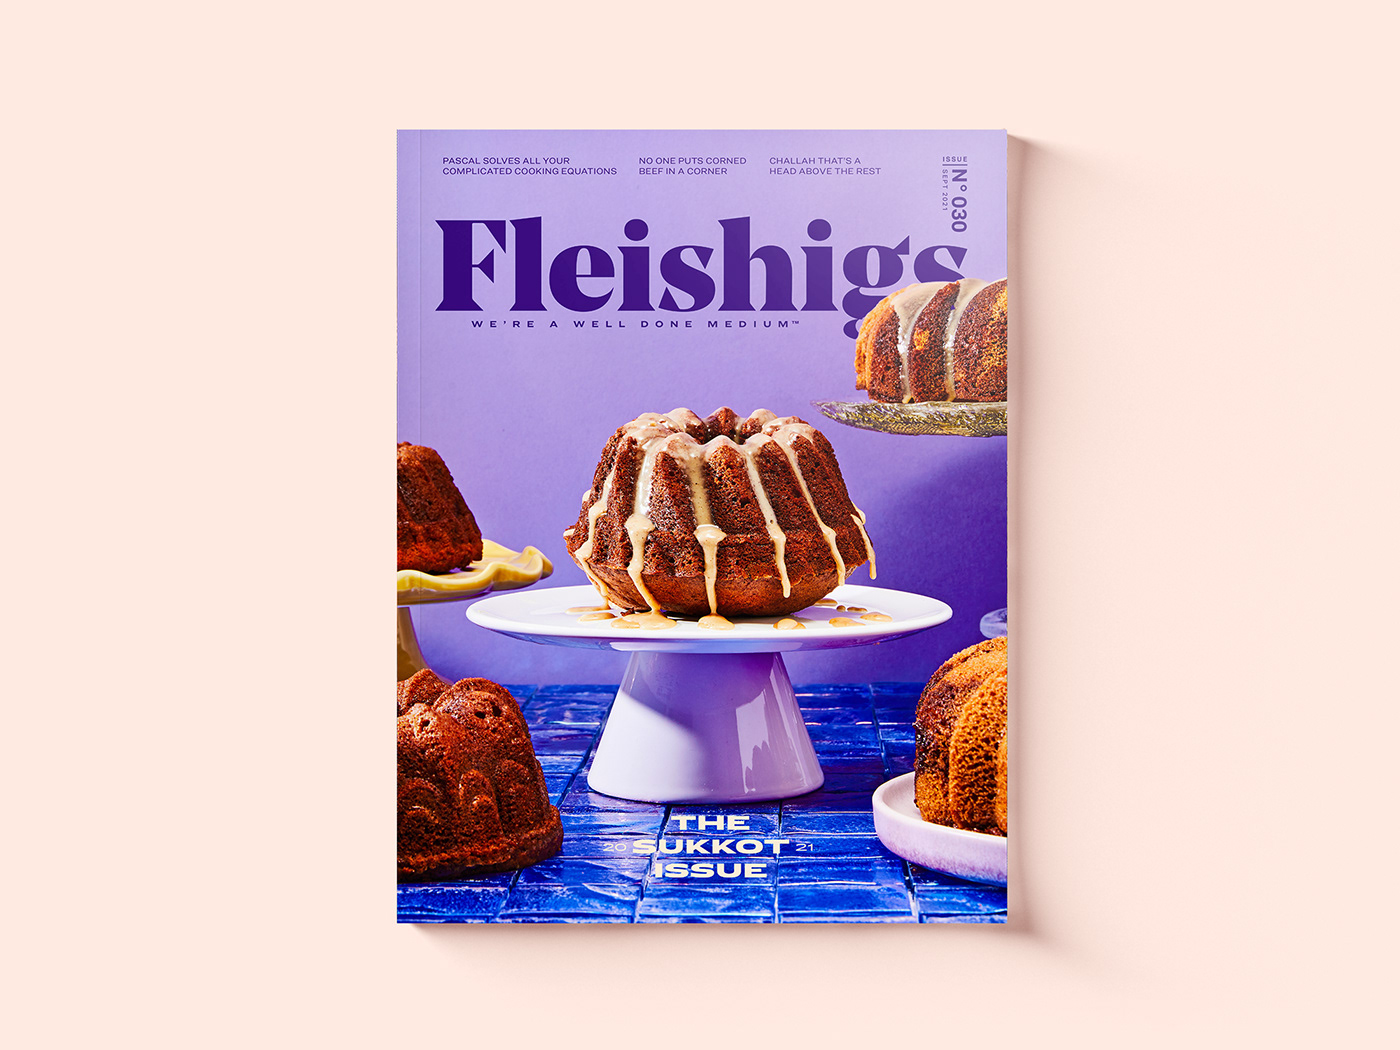 Fleishigs magazine cover, issue 30